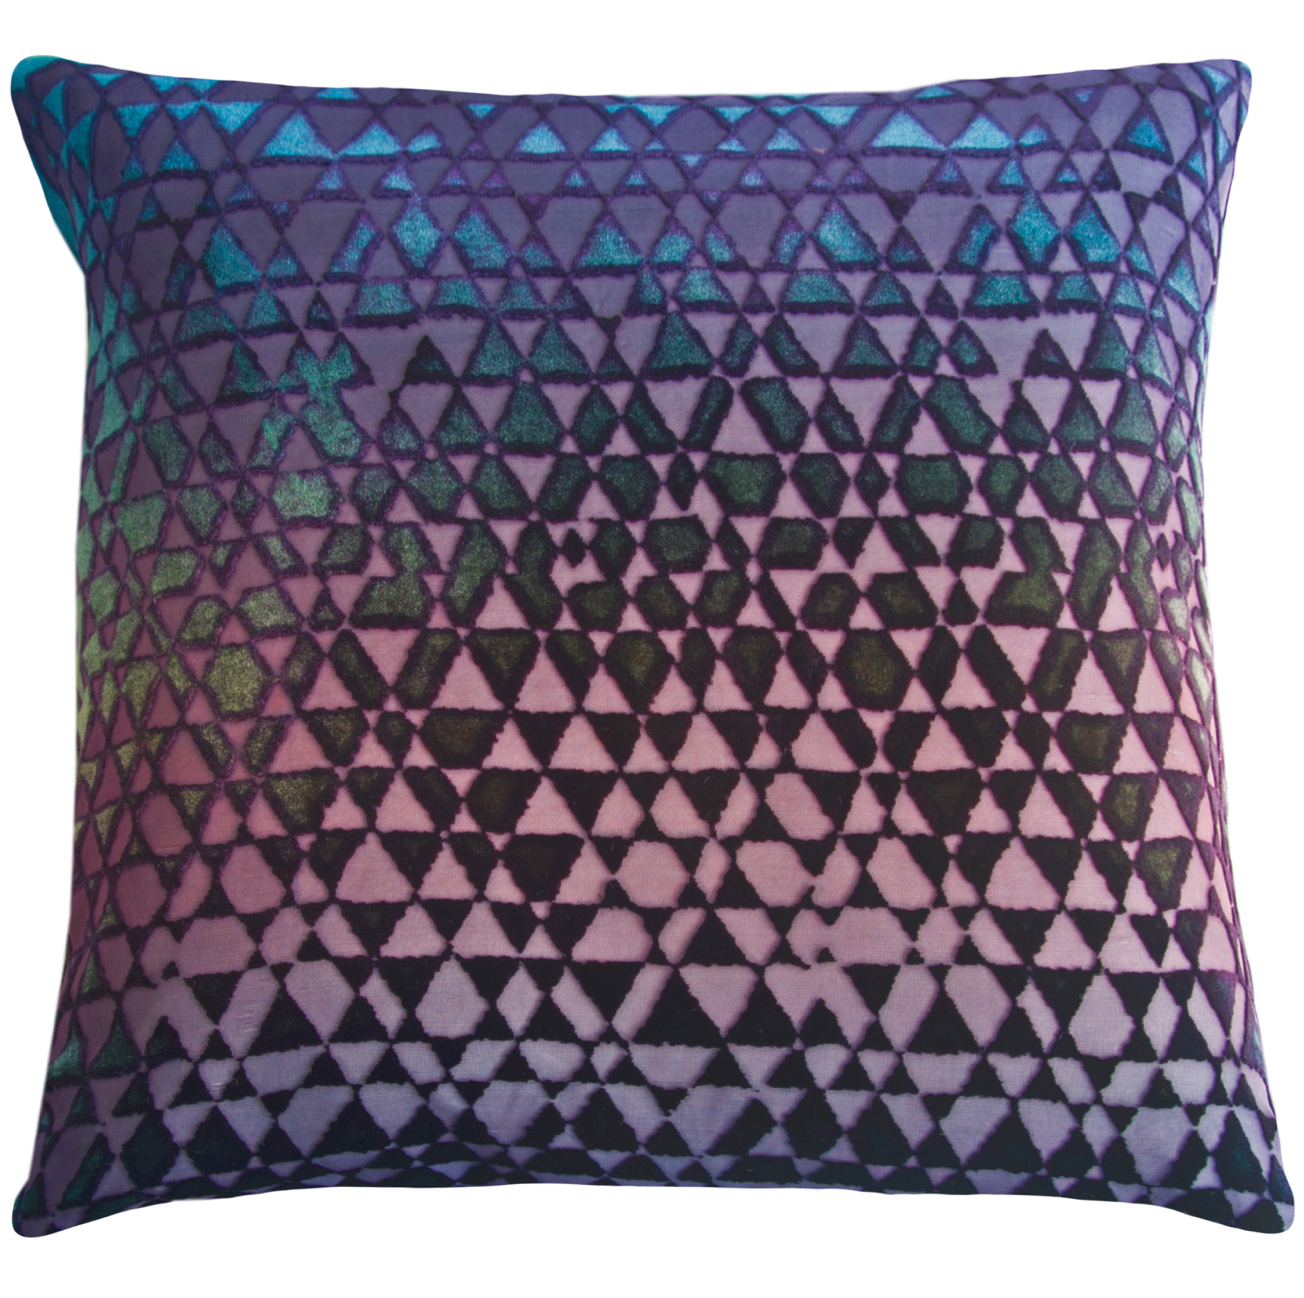 Kevin O'Brien Triangles velvet pillows